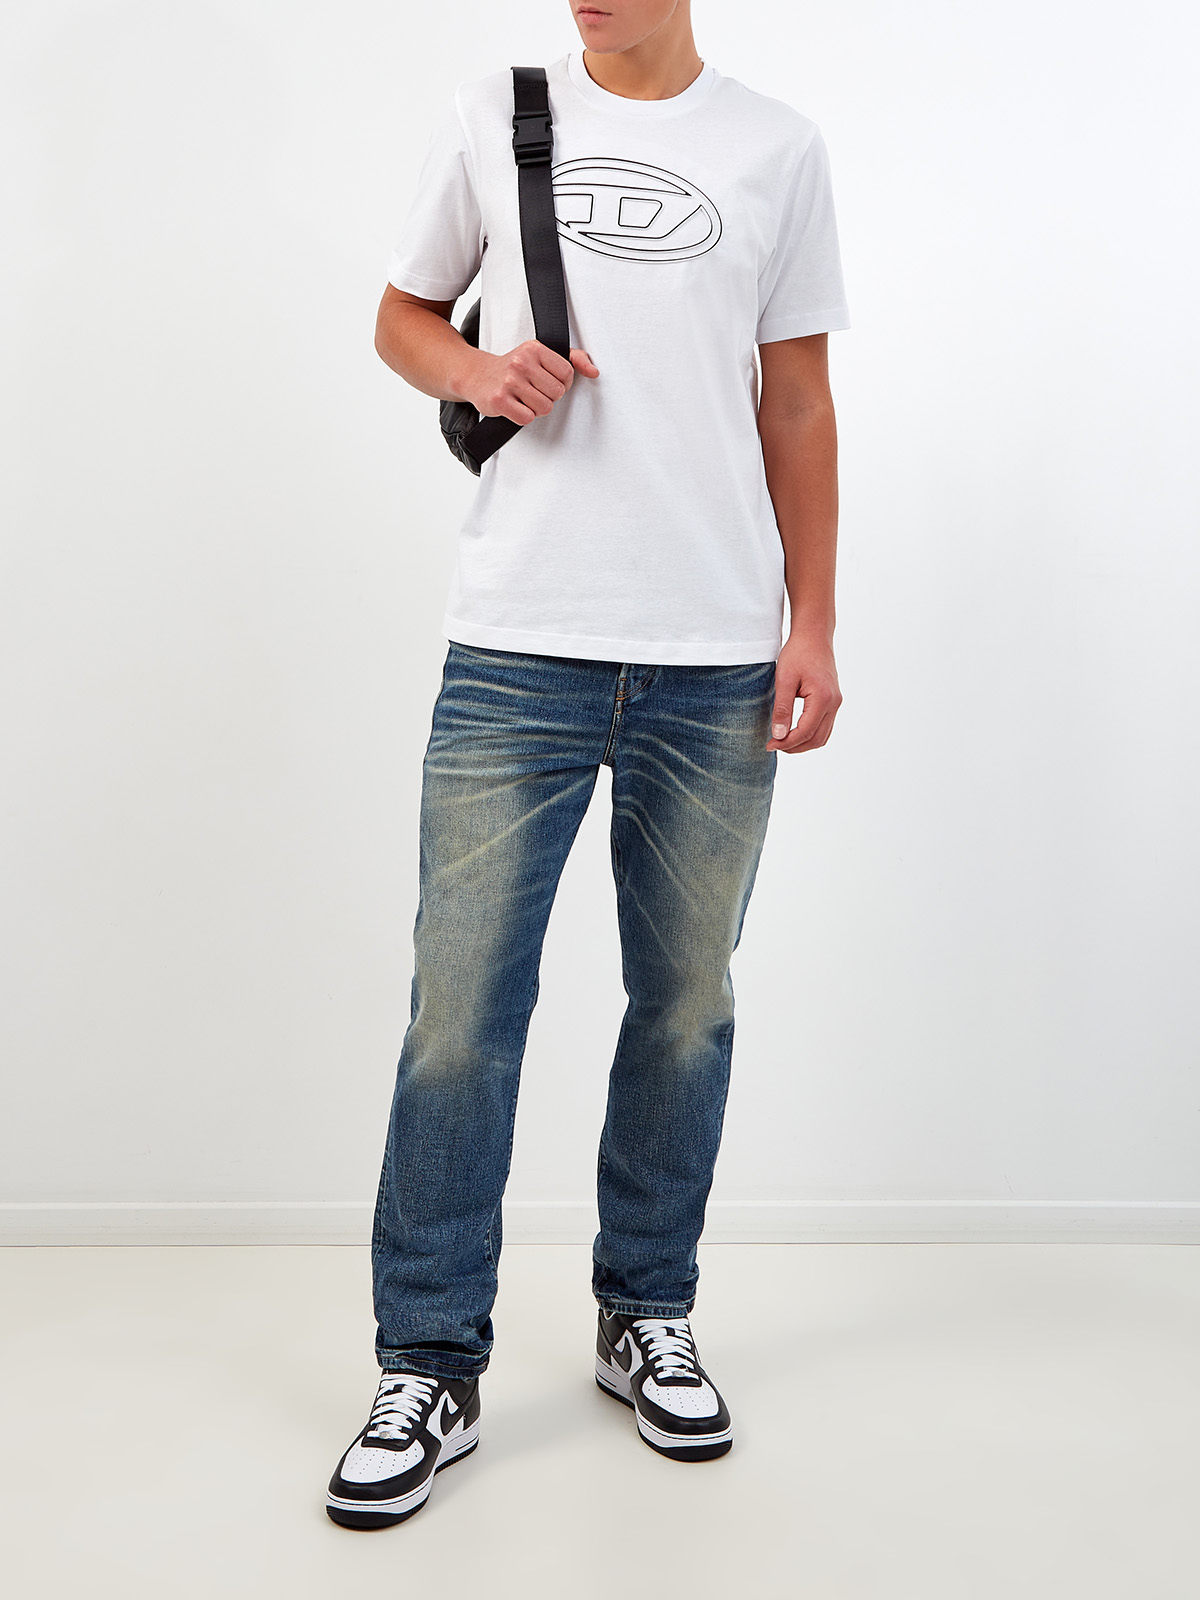 Хлопковая футболка T-Just с макро-логотипом Oval D DIESEL, цвет белый, размер S;M;L;XL;2XL;3XL - фото 2